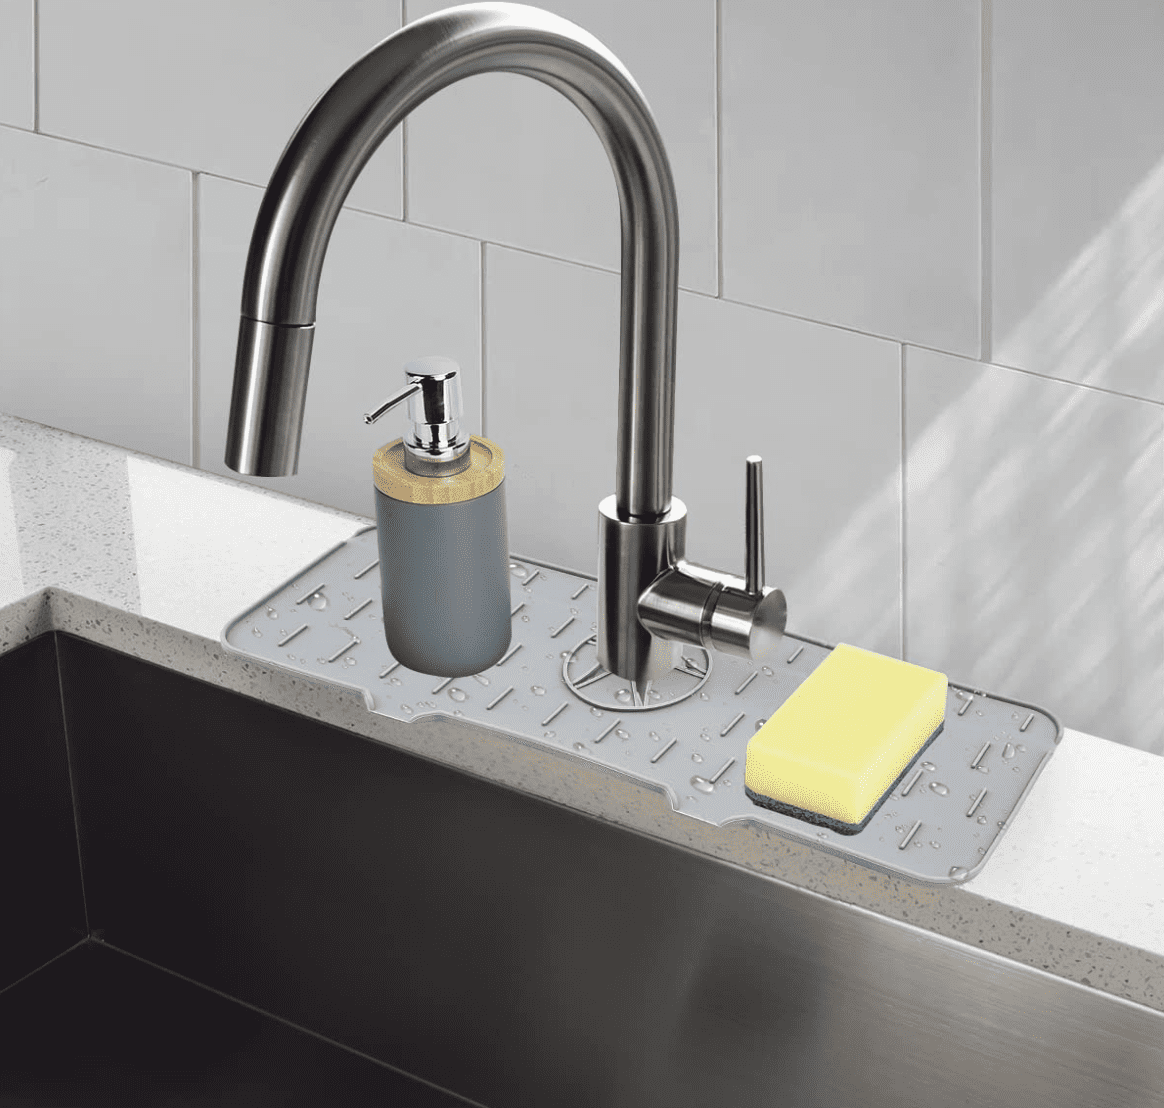 Splash Guard – Create Good Sinks